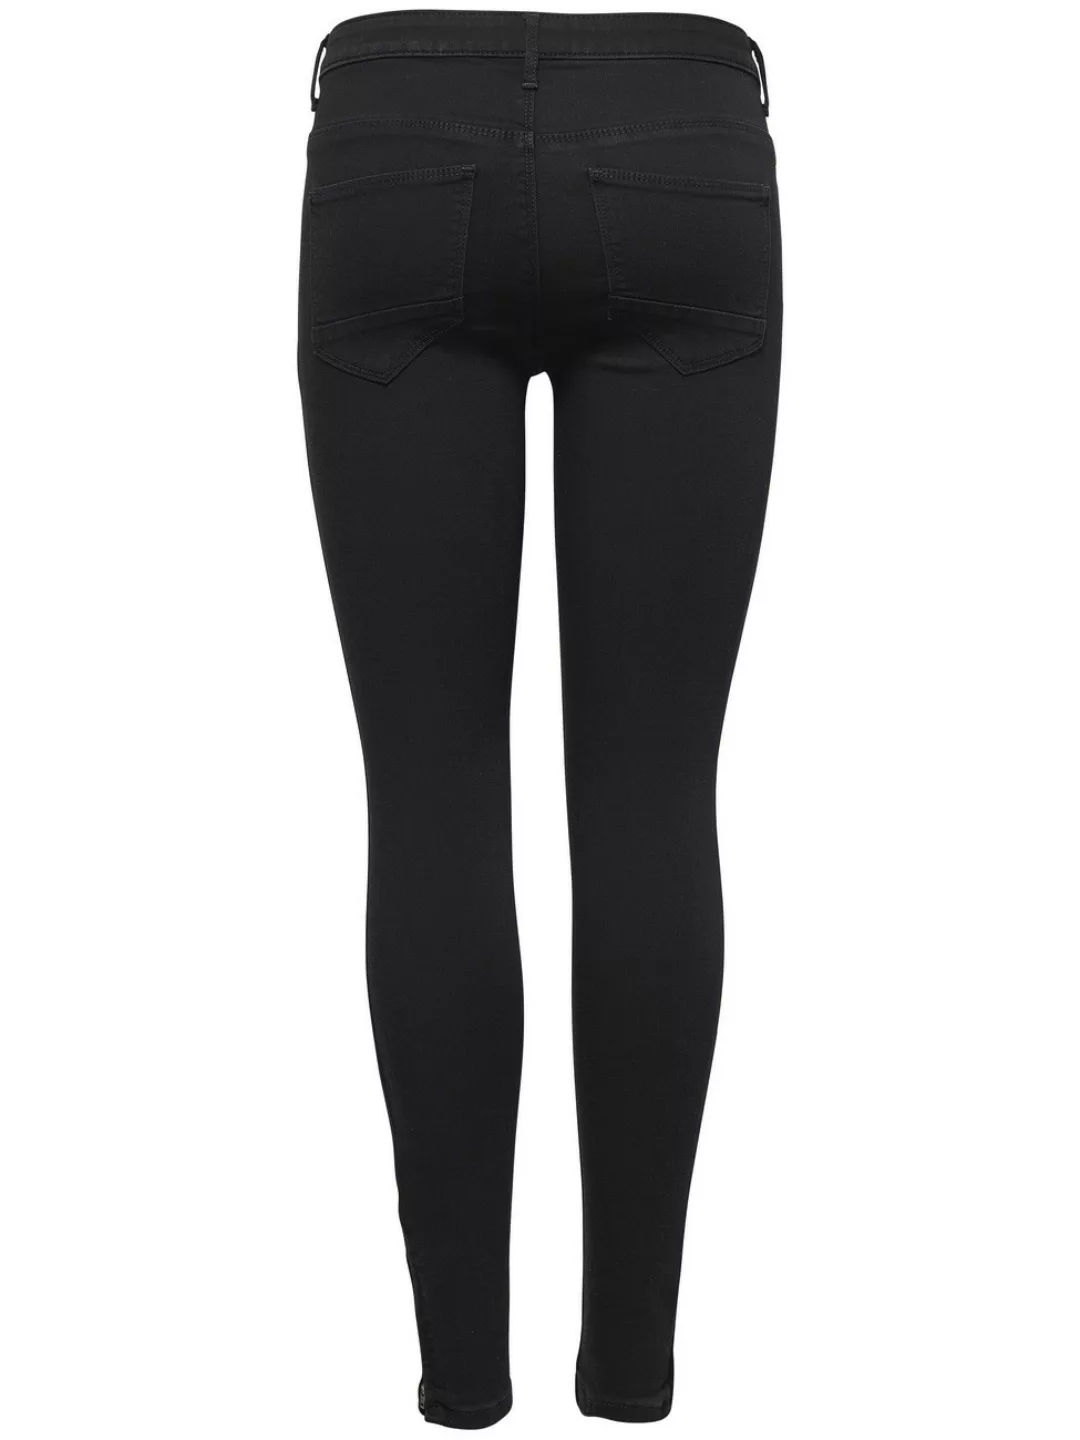 Only Damen Jeans onlKENDELL ETERNAL ANKLE - Skinny Fit - Schwarz - Black günstig online kaufen